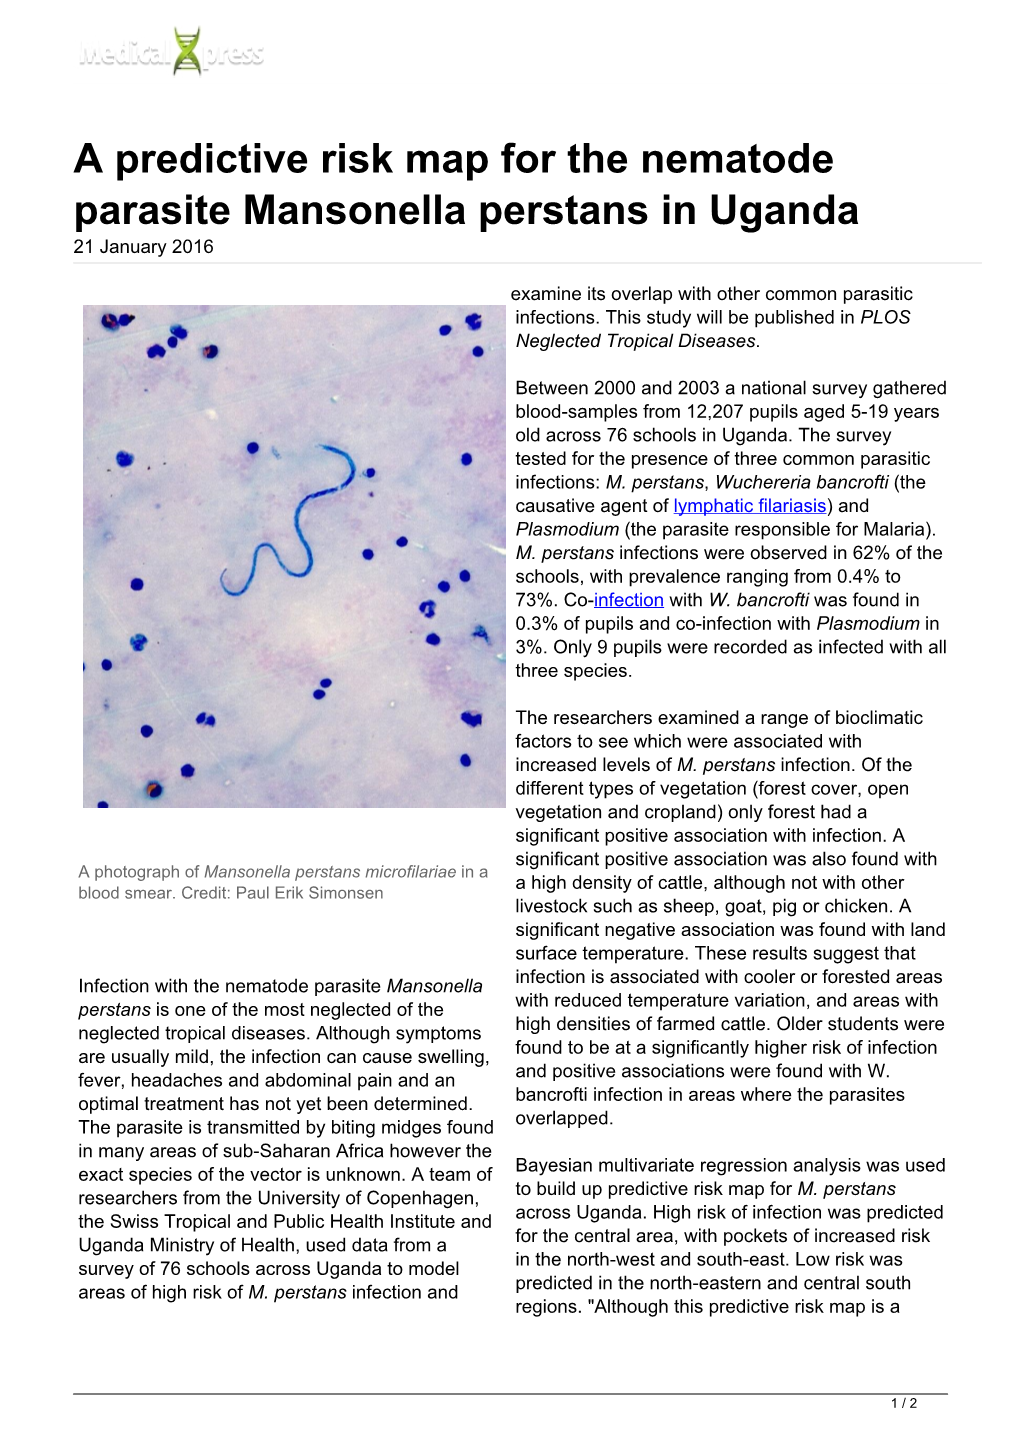 A Predictive Risk Map for the Nematode Parasite Mansonella Perstans in Uganda 21 January 2016